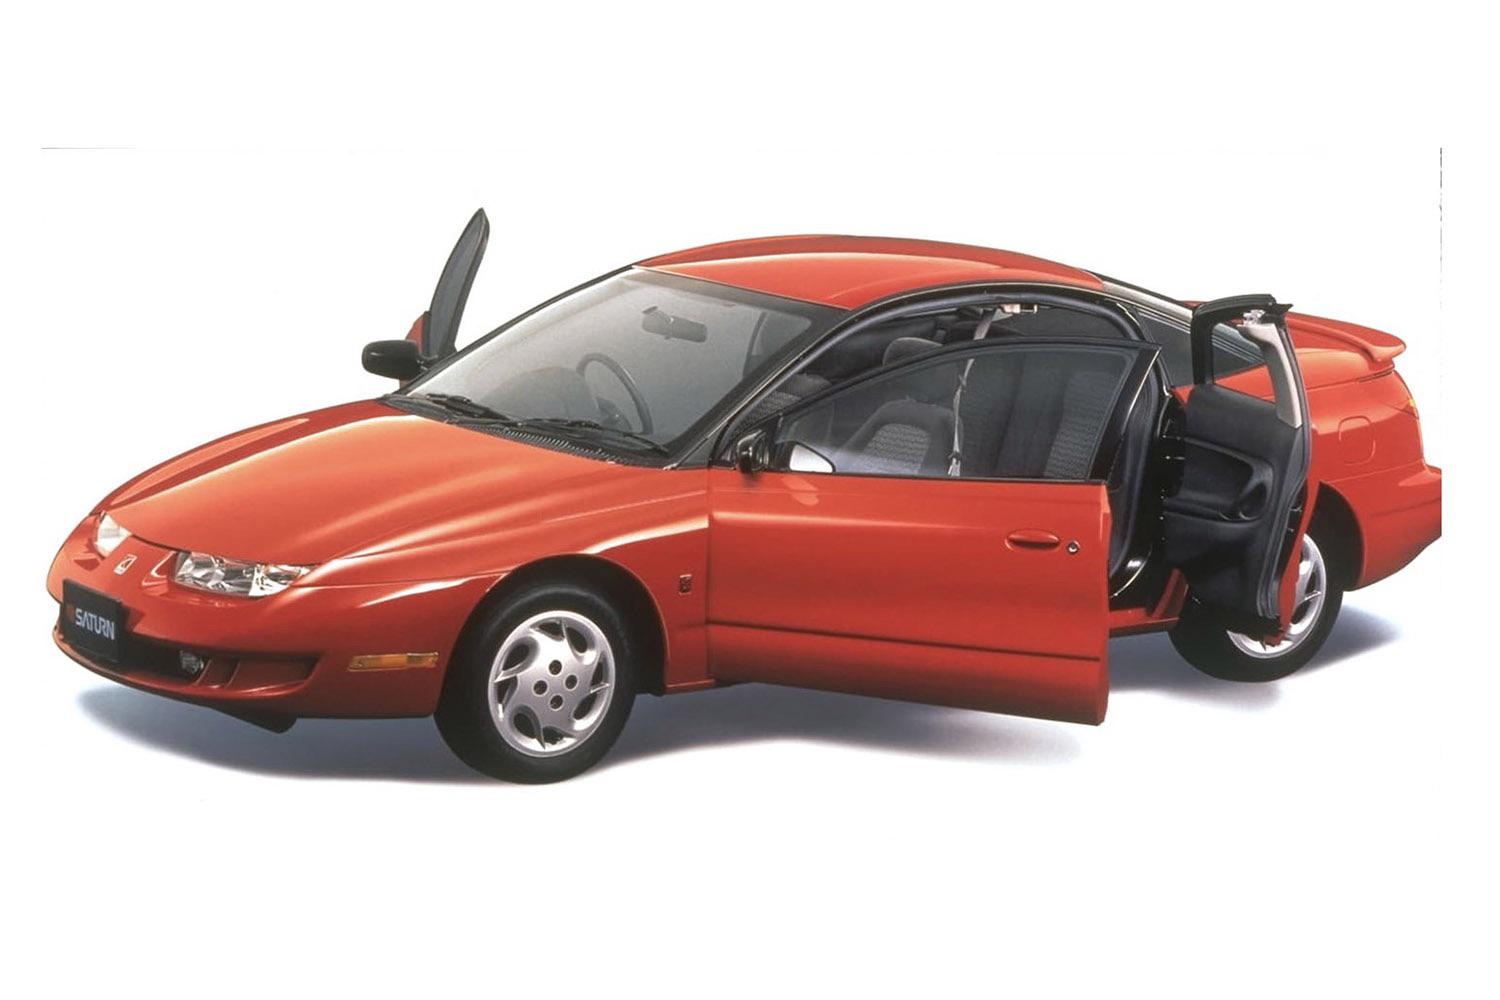 1999 Saturn SC2 (Yanase JDM model). The official car of? :  r/regularcarreviews